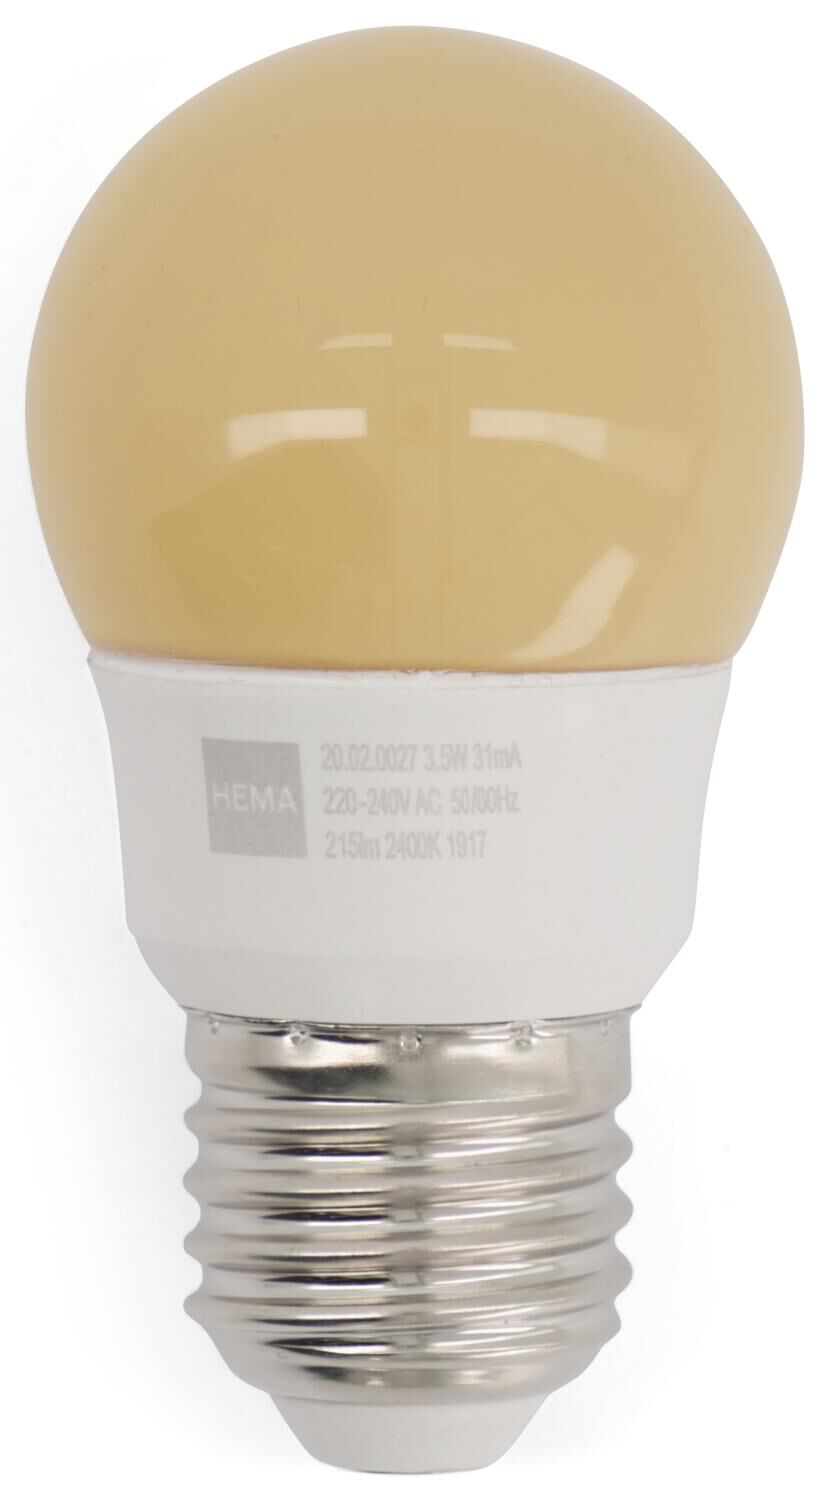 HEMA LED Lamp 22W - 215 Lm - Kogel - Flame (wit) van HEMA - Makeover.nl